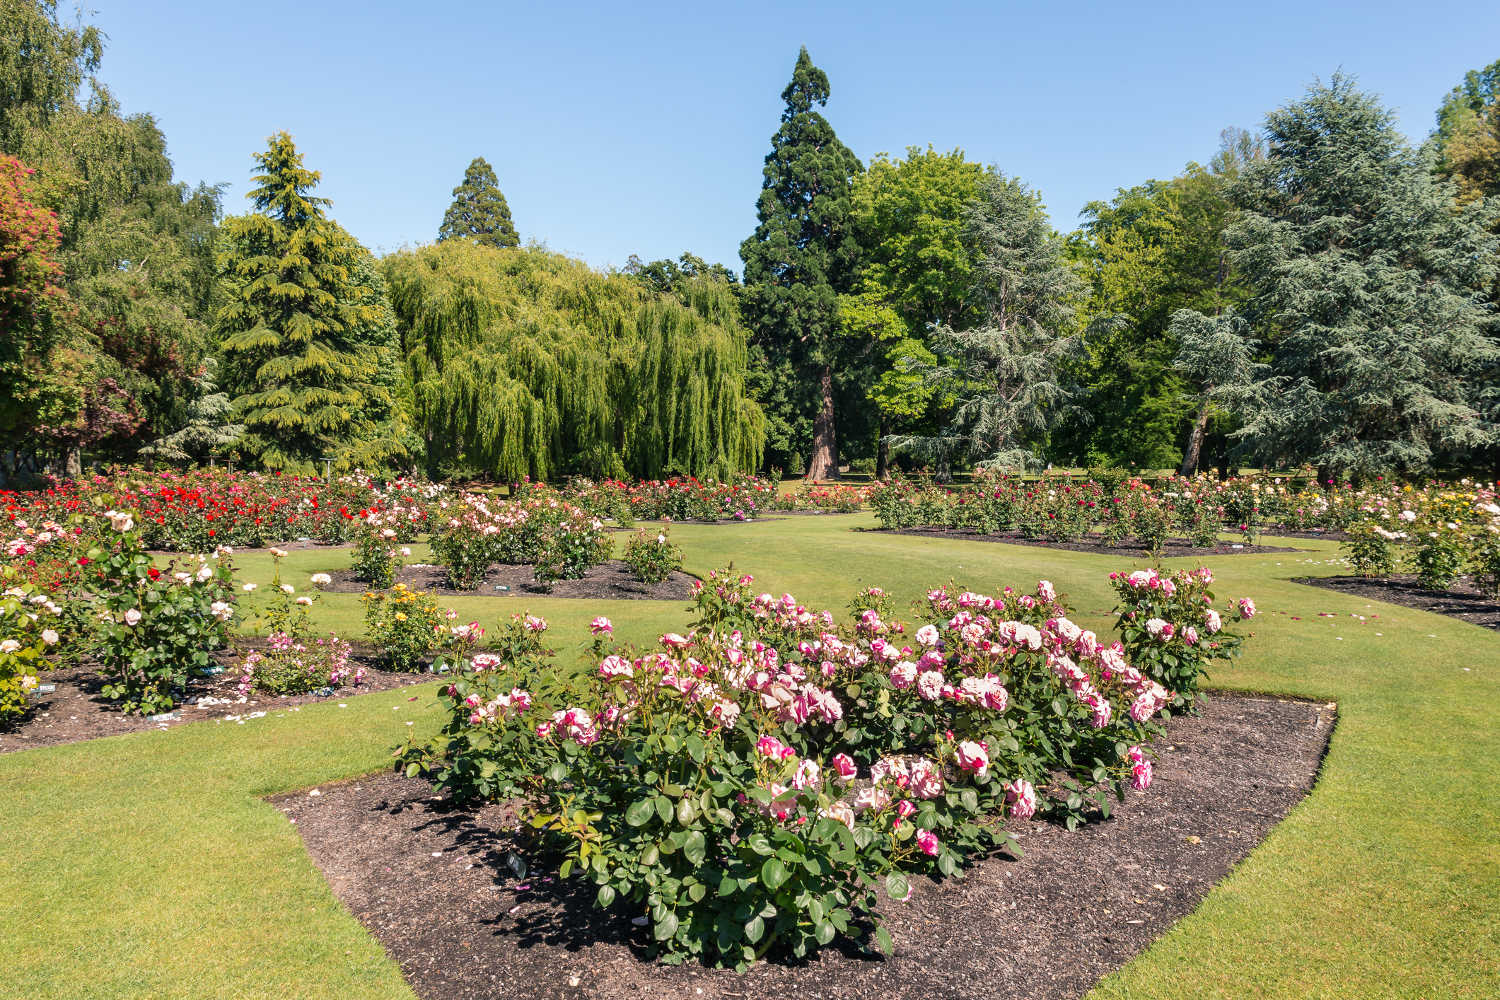 Rose garden in Pollard Park in Blenheim, New Zealand